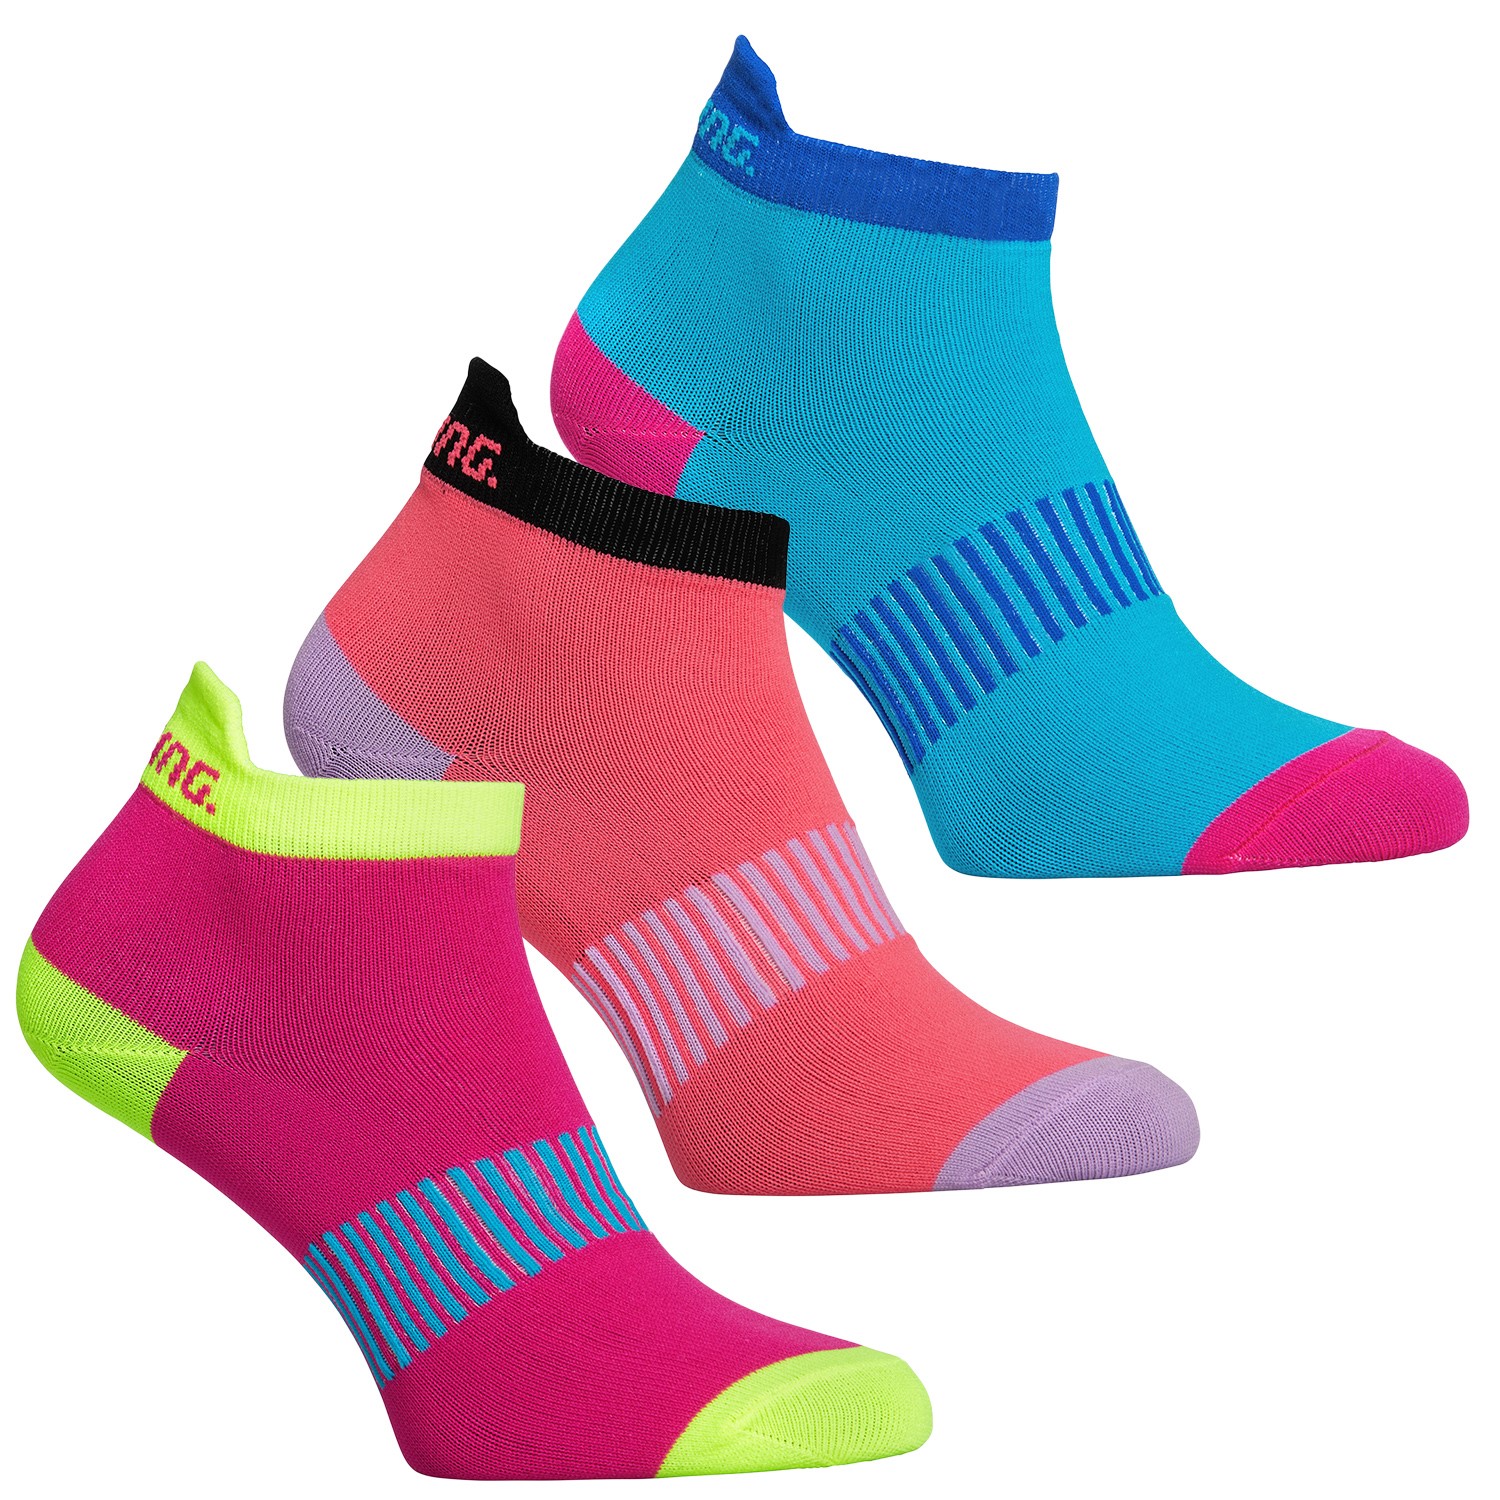 3-Pack Salming Performance Ankle Socks - Sport socks - Socks - Socks ...